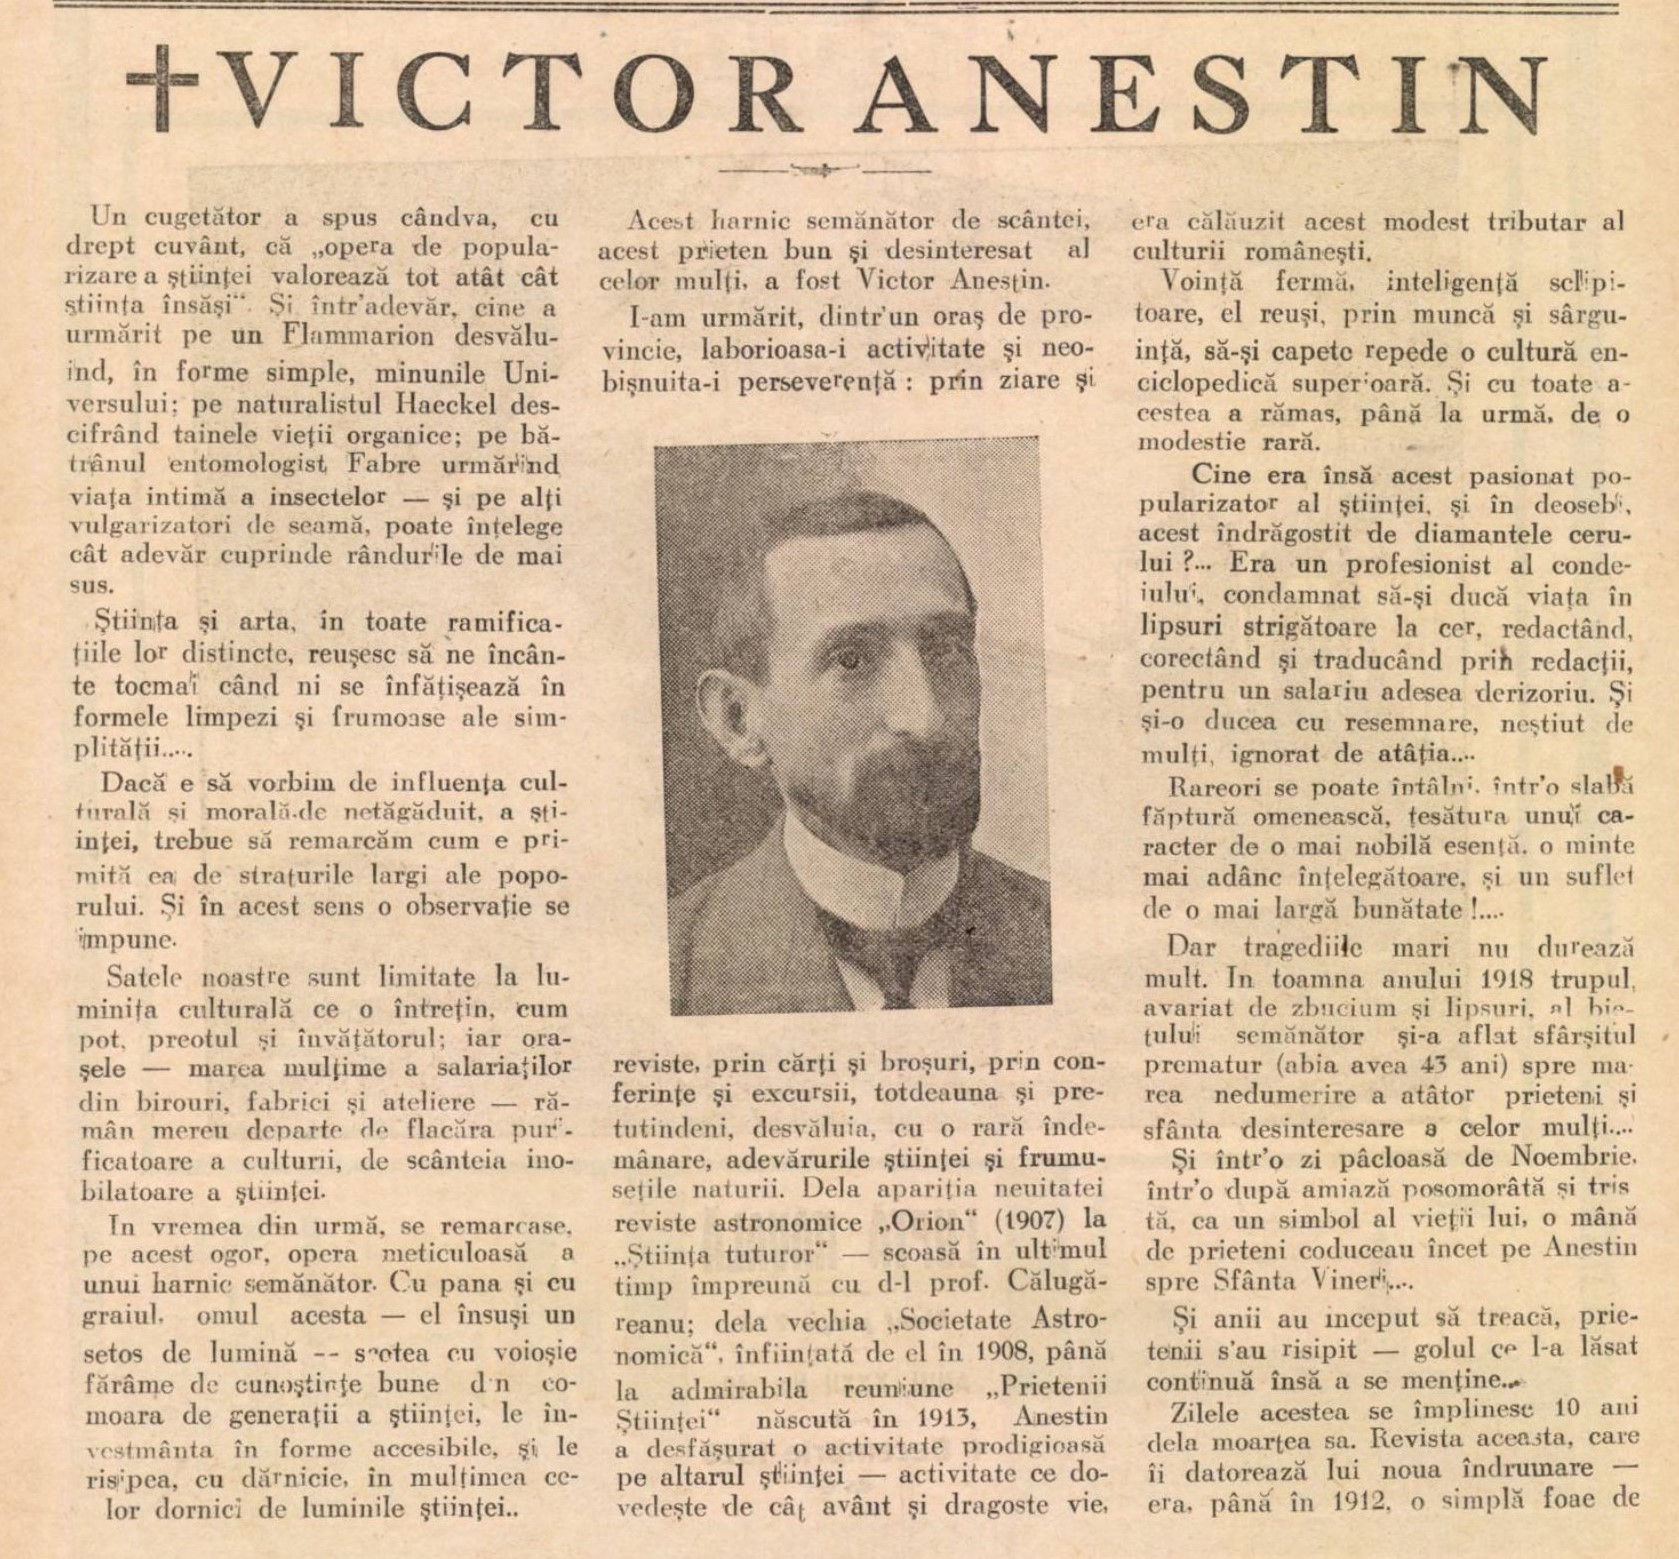 Victor Anestin